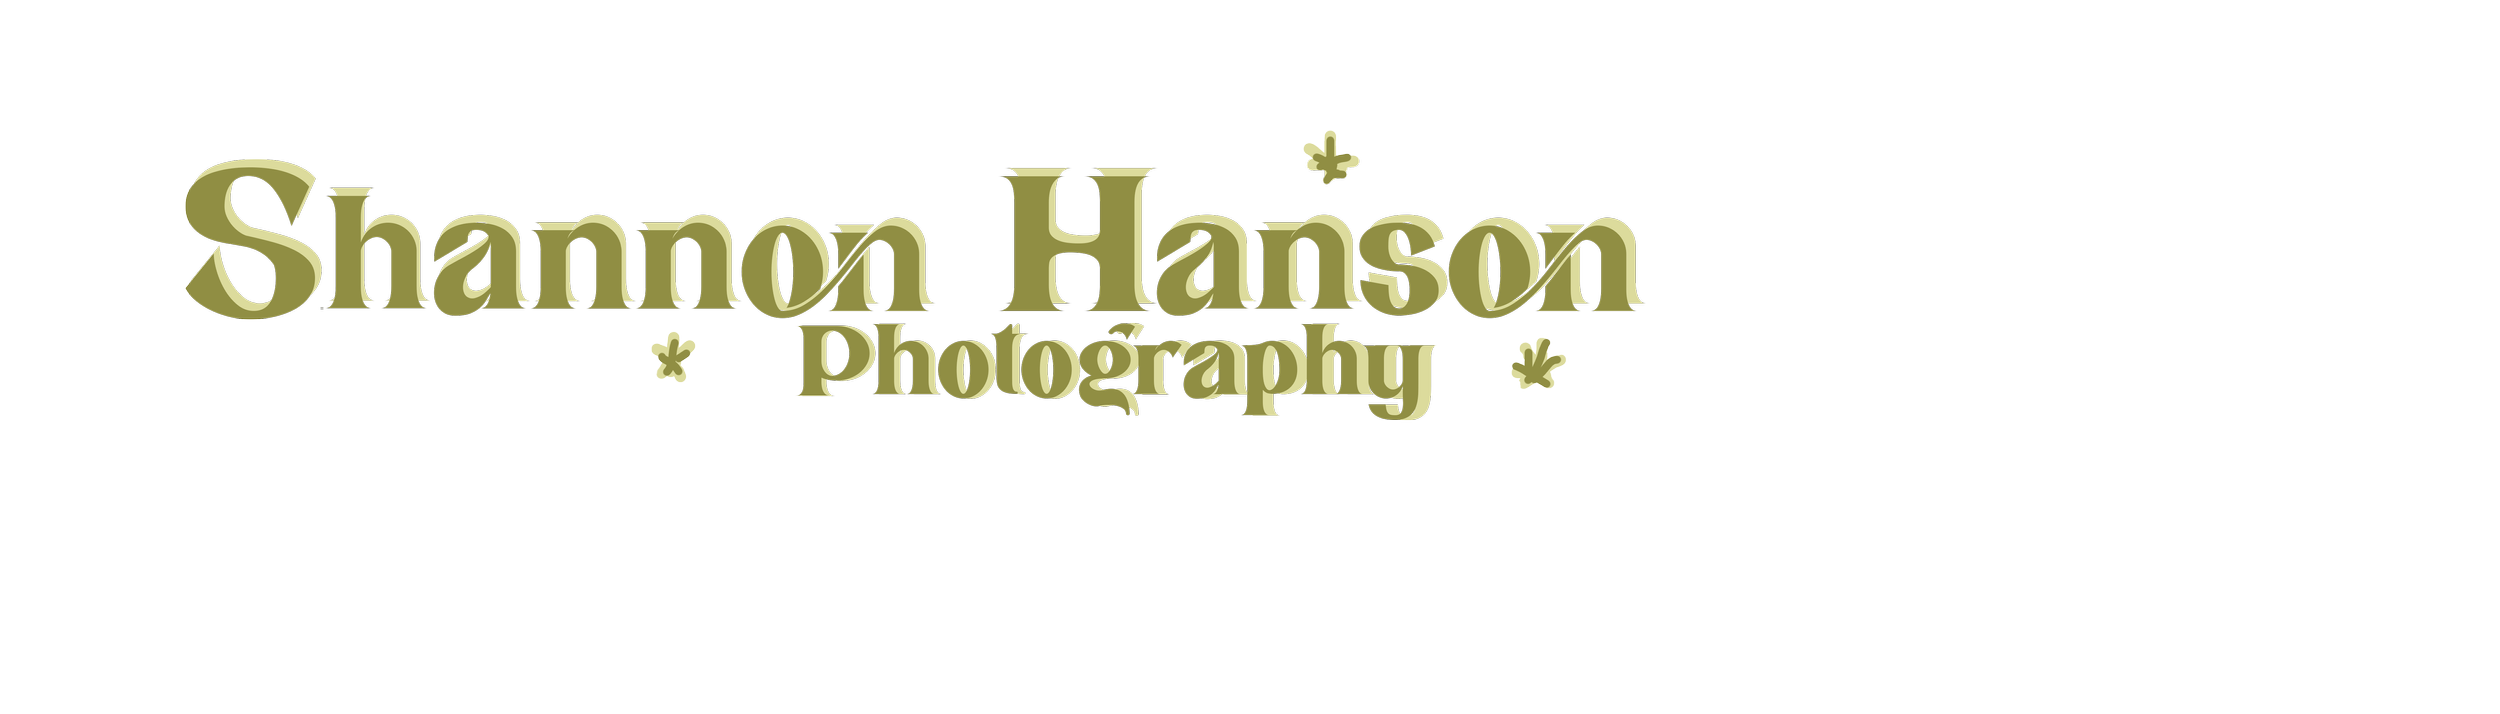 Shannon Hanson Photography